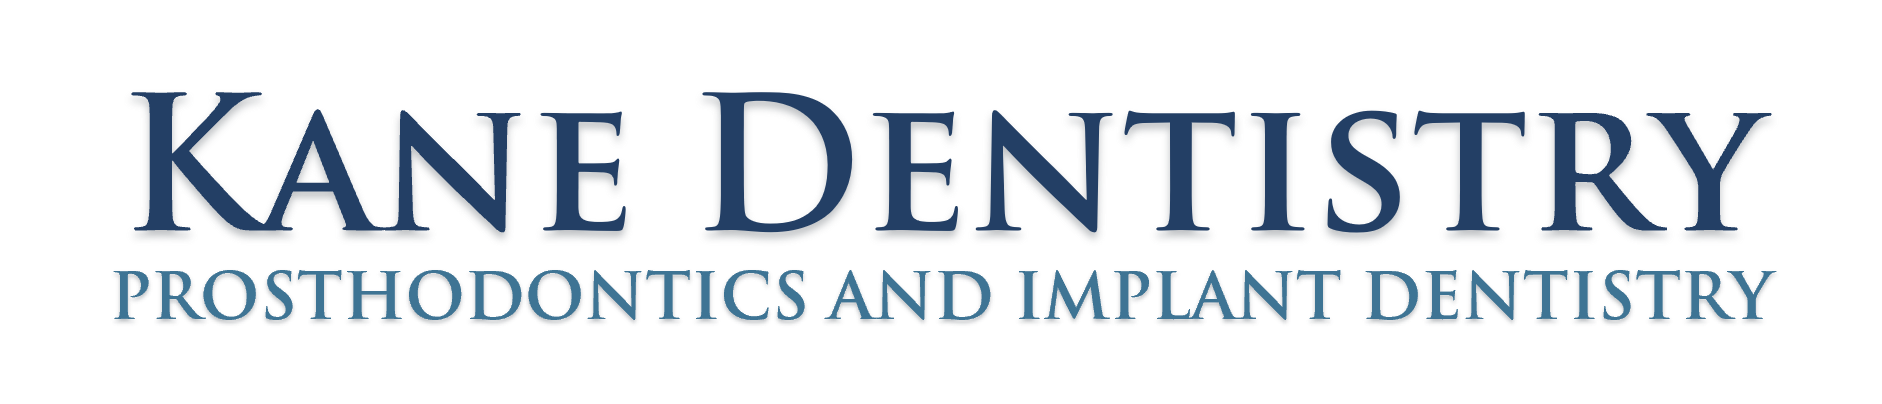 Kane Dentistry Prosthodontics and Implant Dentistry